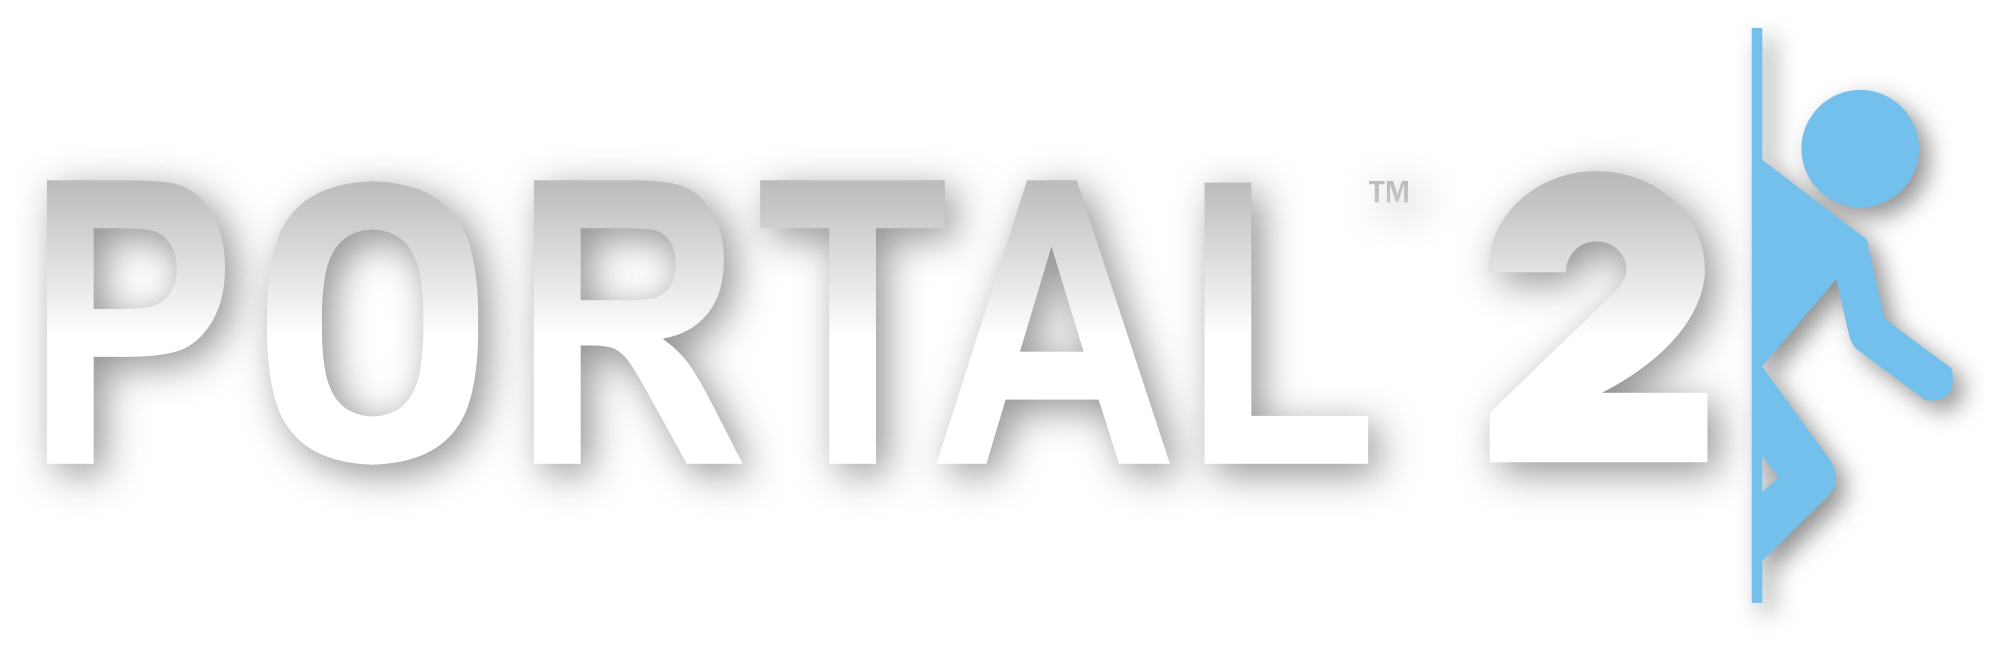 Portal Logo PNG Photos